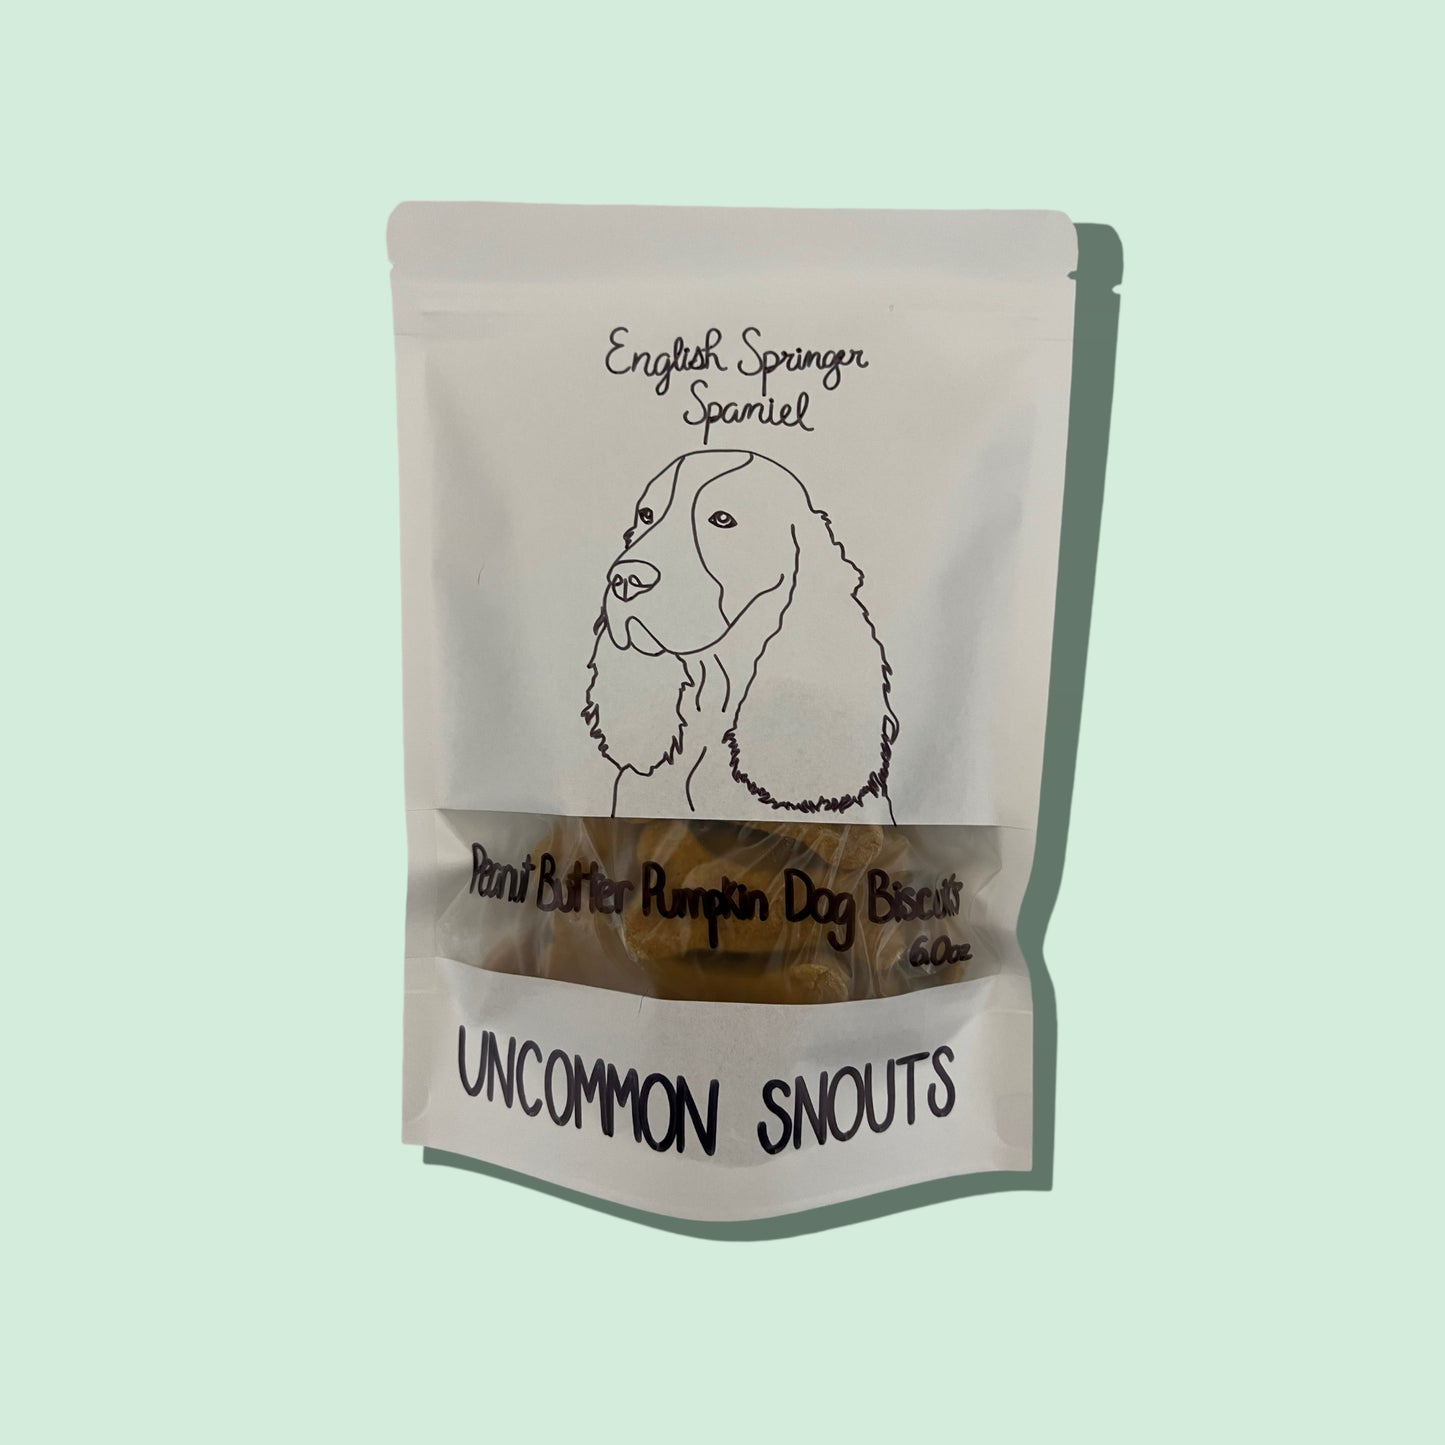 Peanut Butter Pumpkin Dog Biscuits - English Springer Spaniel